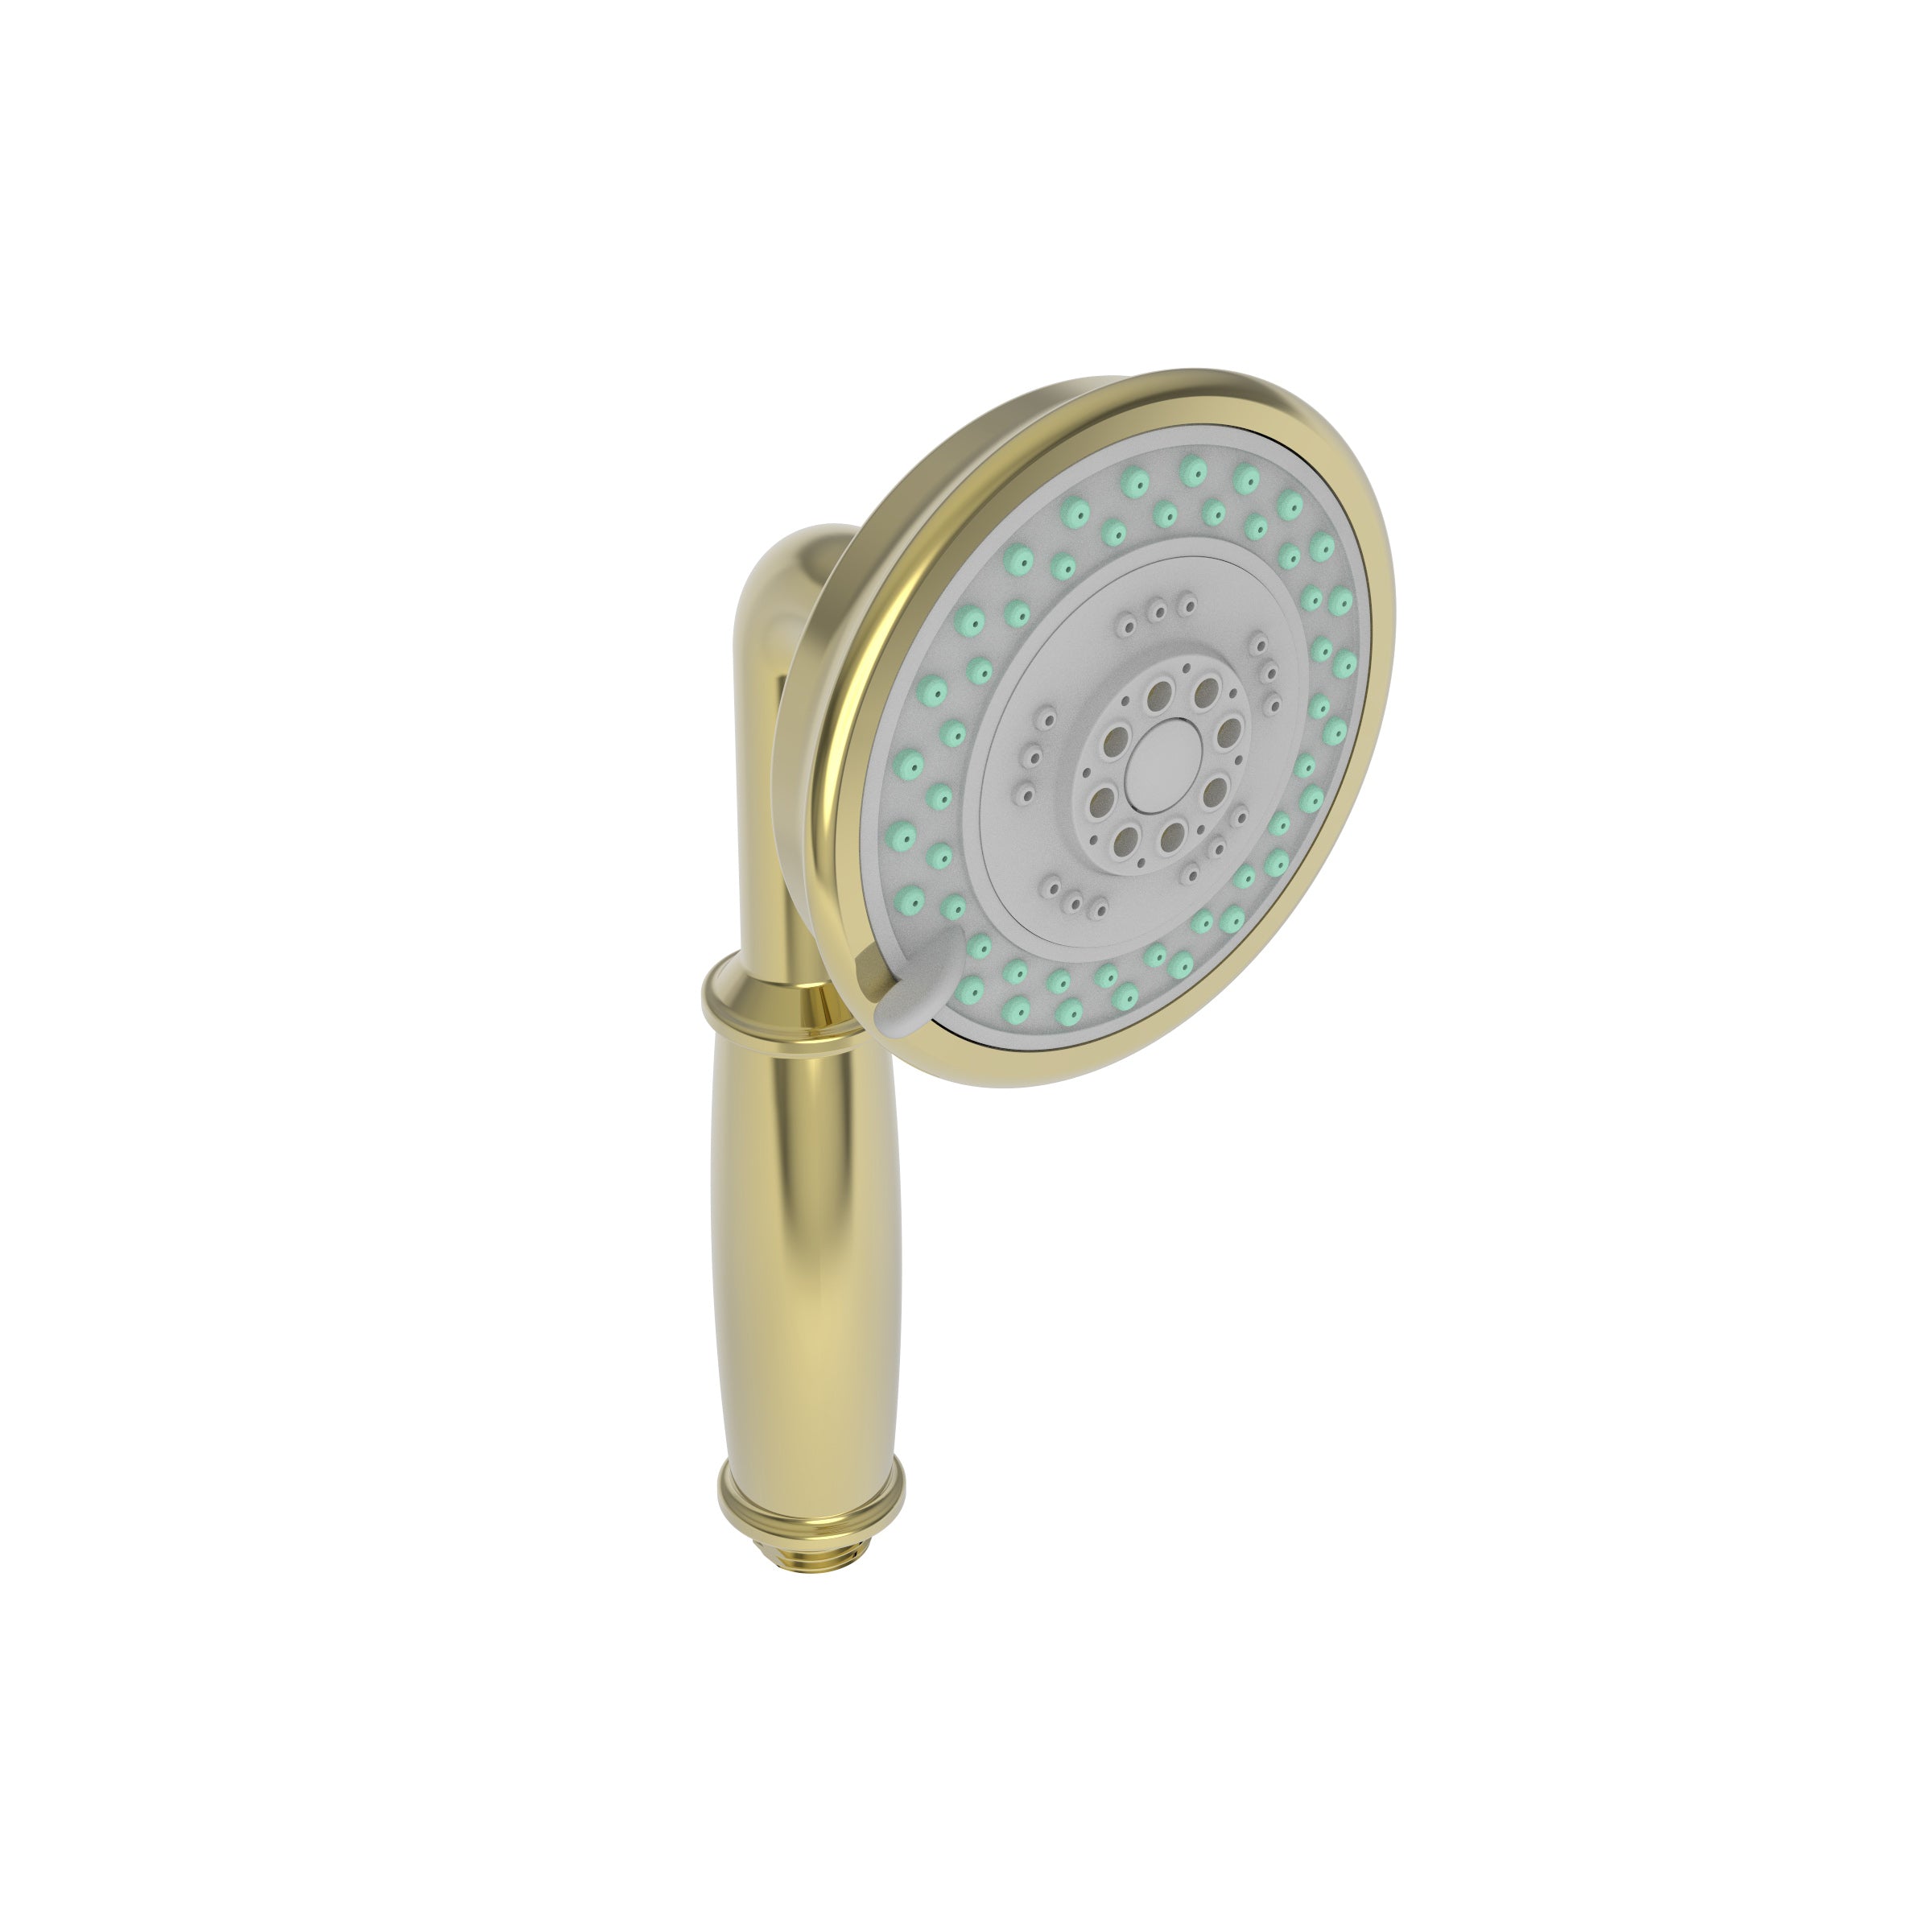 Newport Brass Tub & Shower Multifunction Hand Shower